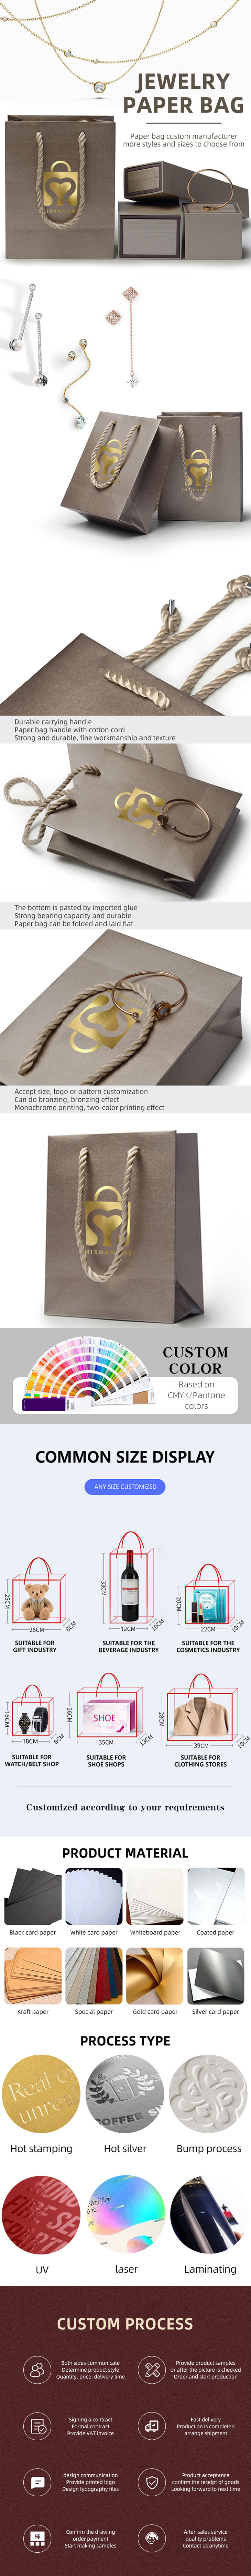 jewellery paper bag design